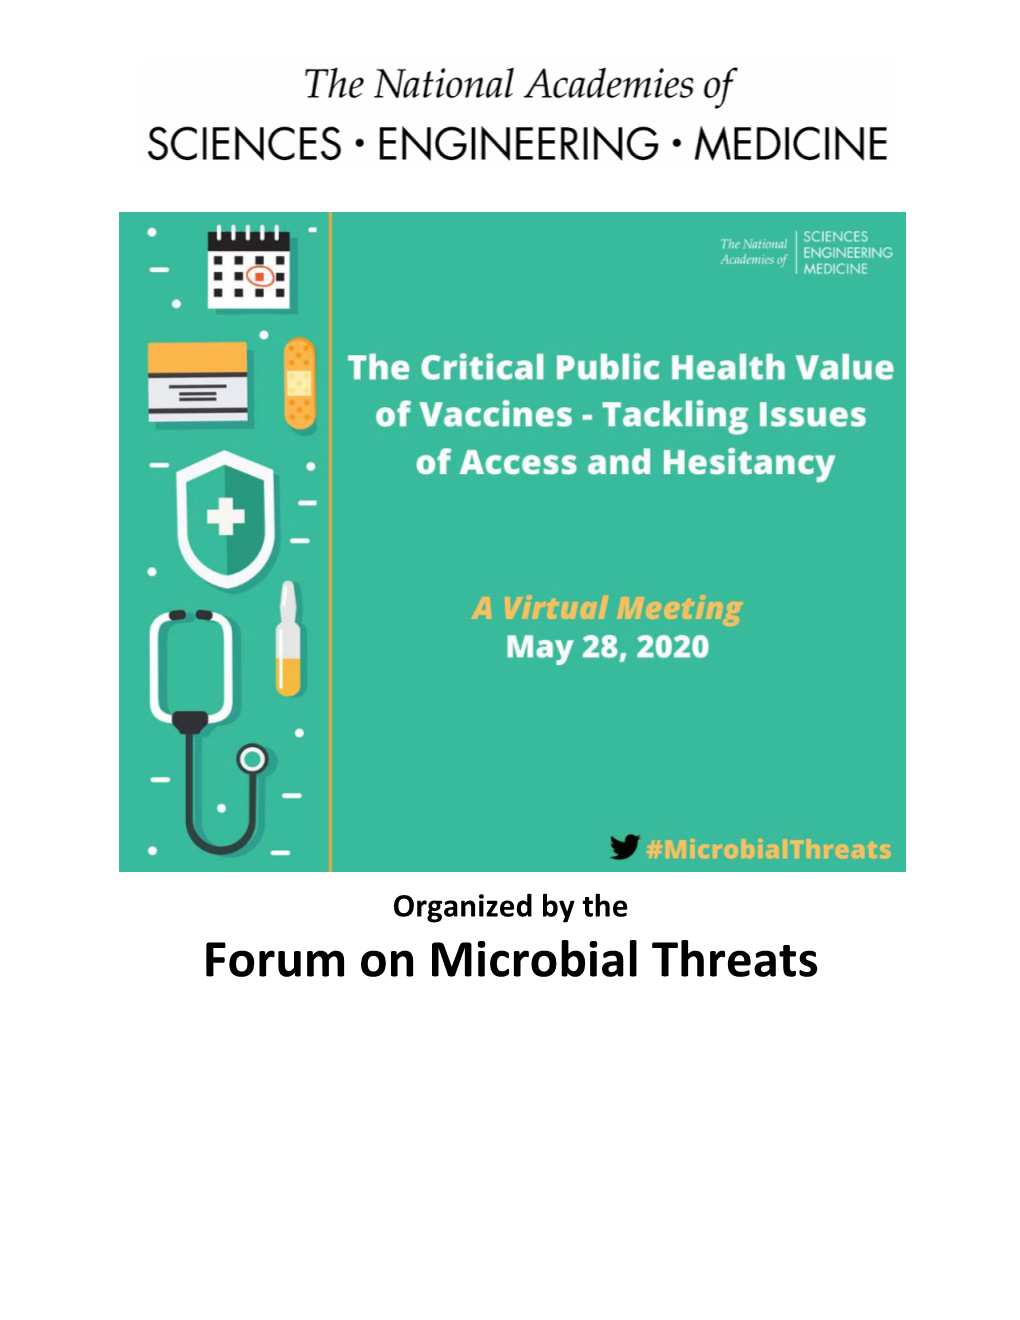 Forum on Microbial Threats